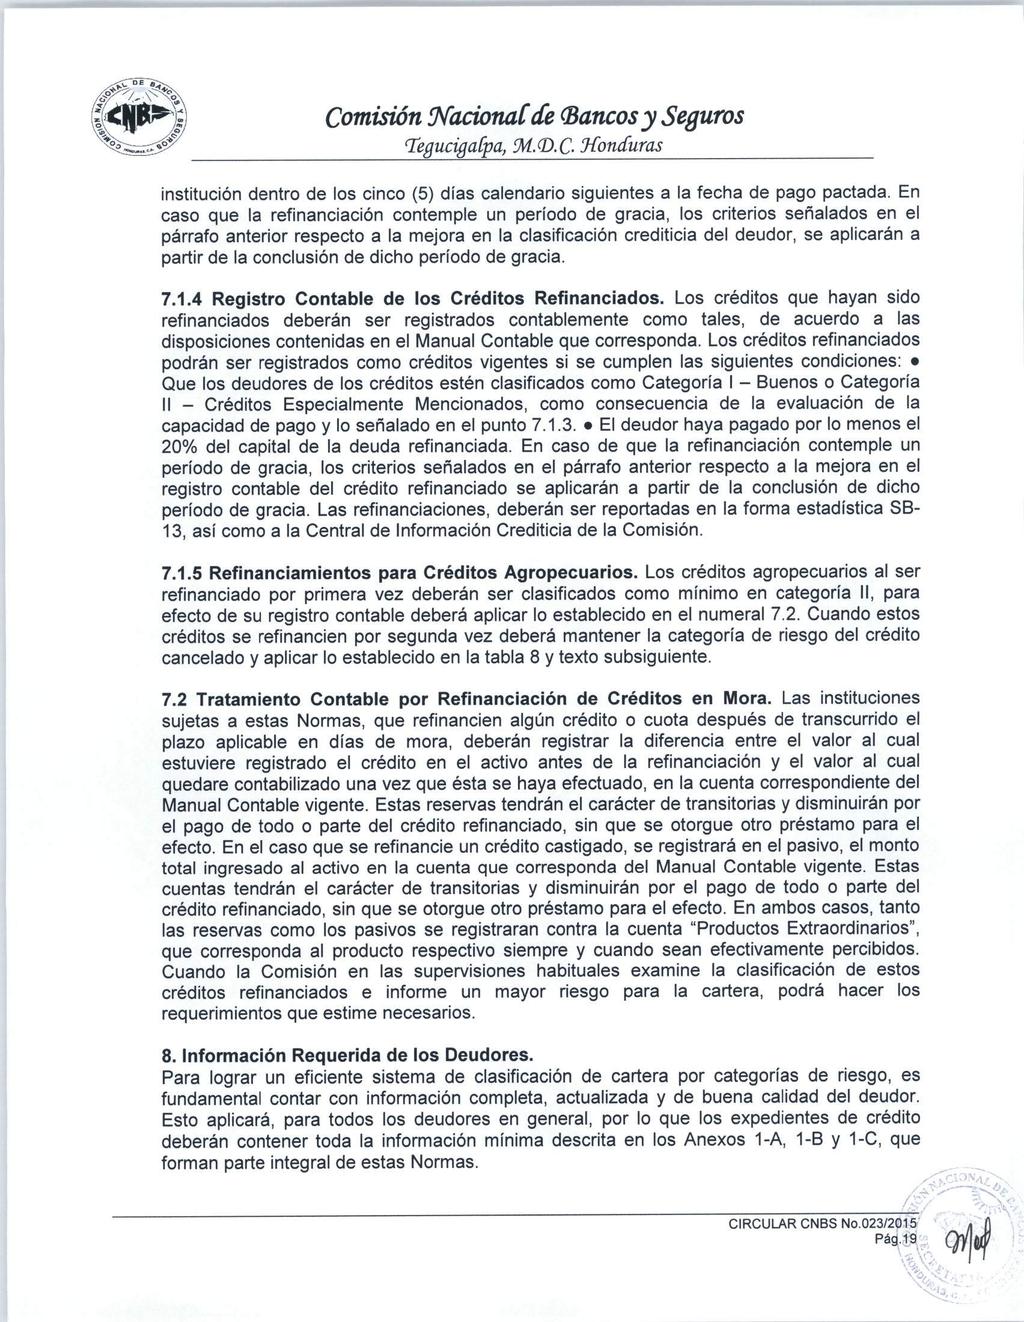 Comisión Nacionalde (Bancosy Seguros TegucigaCpa, JA.<D.C Honduras institución dentro de los cinco (5) días calendario siguientes a la fecha de pago pactada.